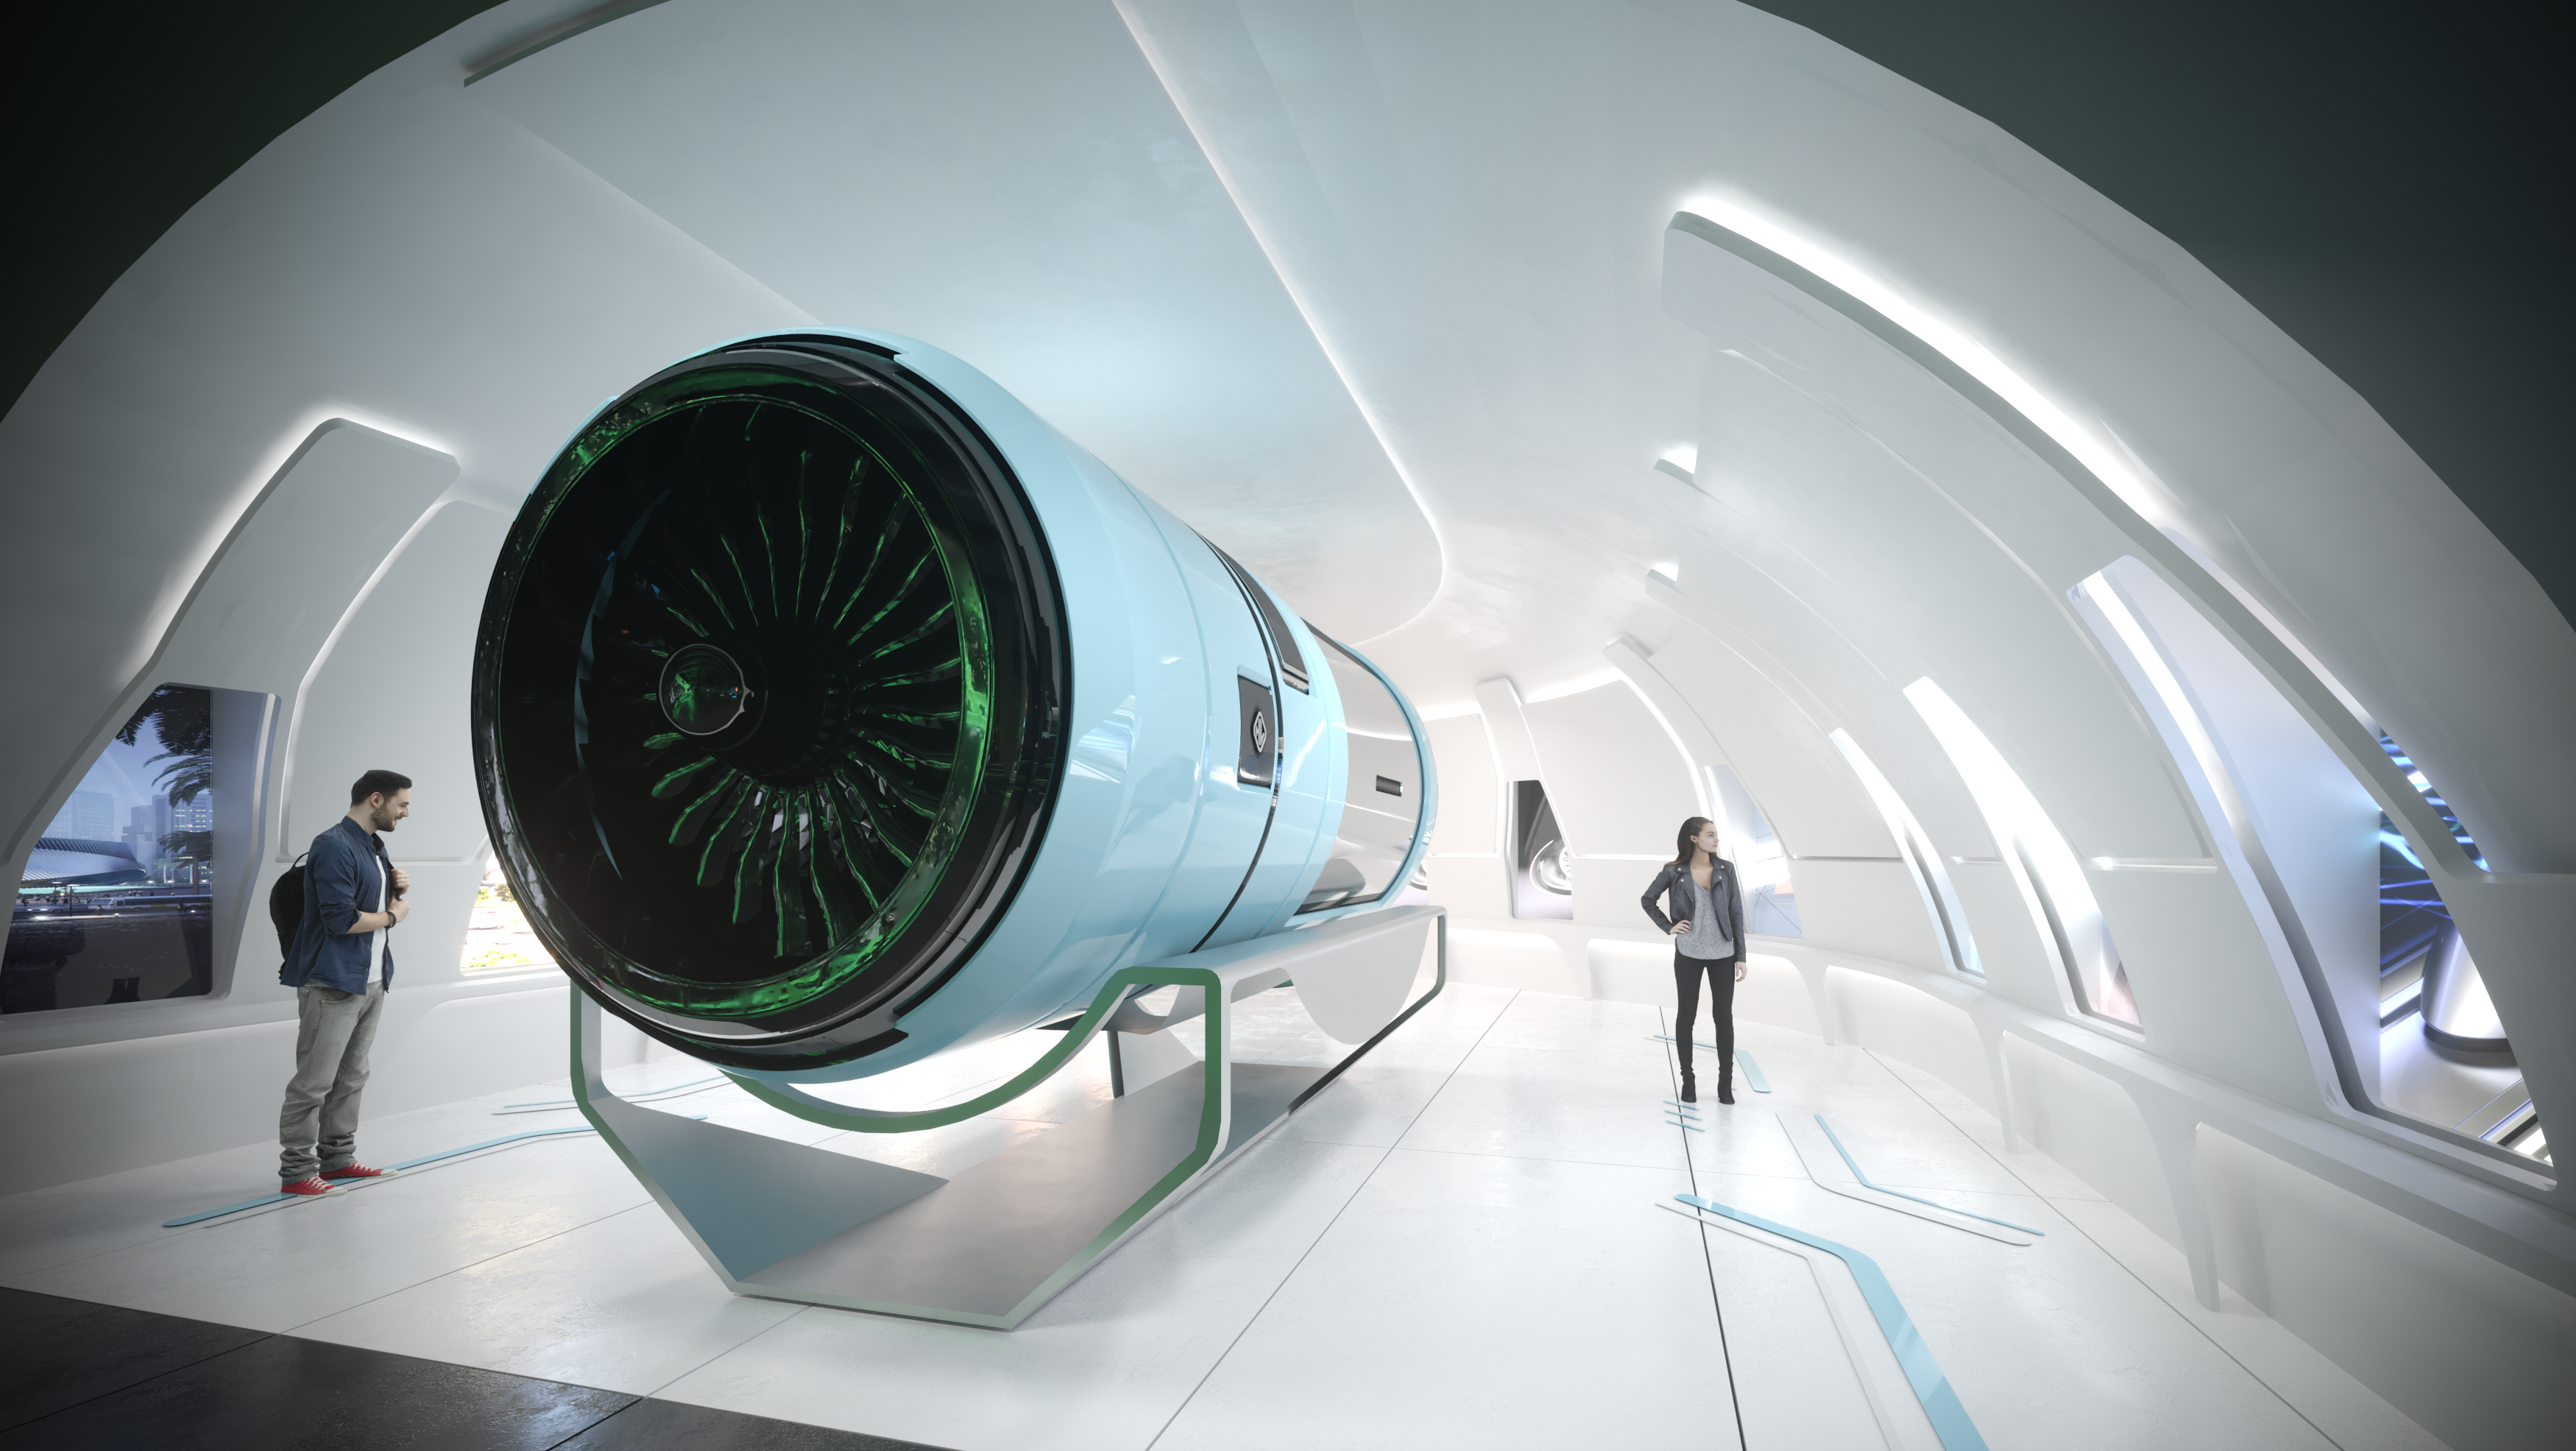 Zeleros' hyperloop vehicle on display at Expo Dubai 2020.